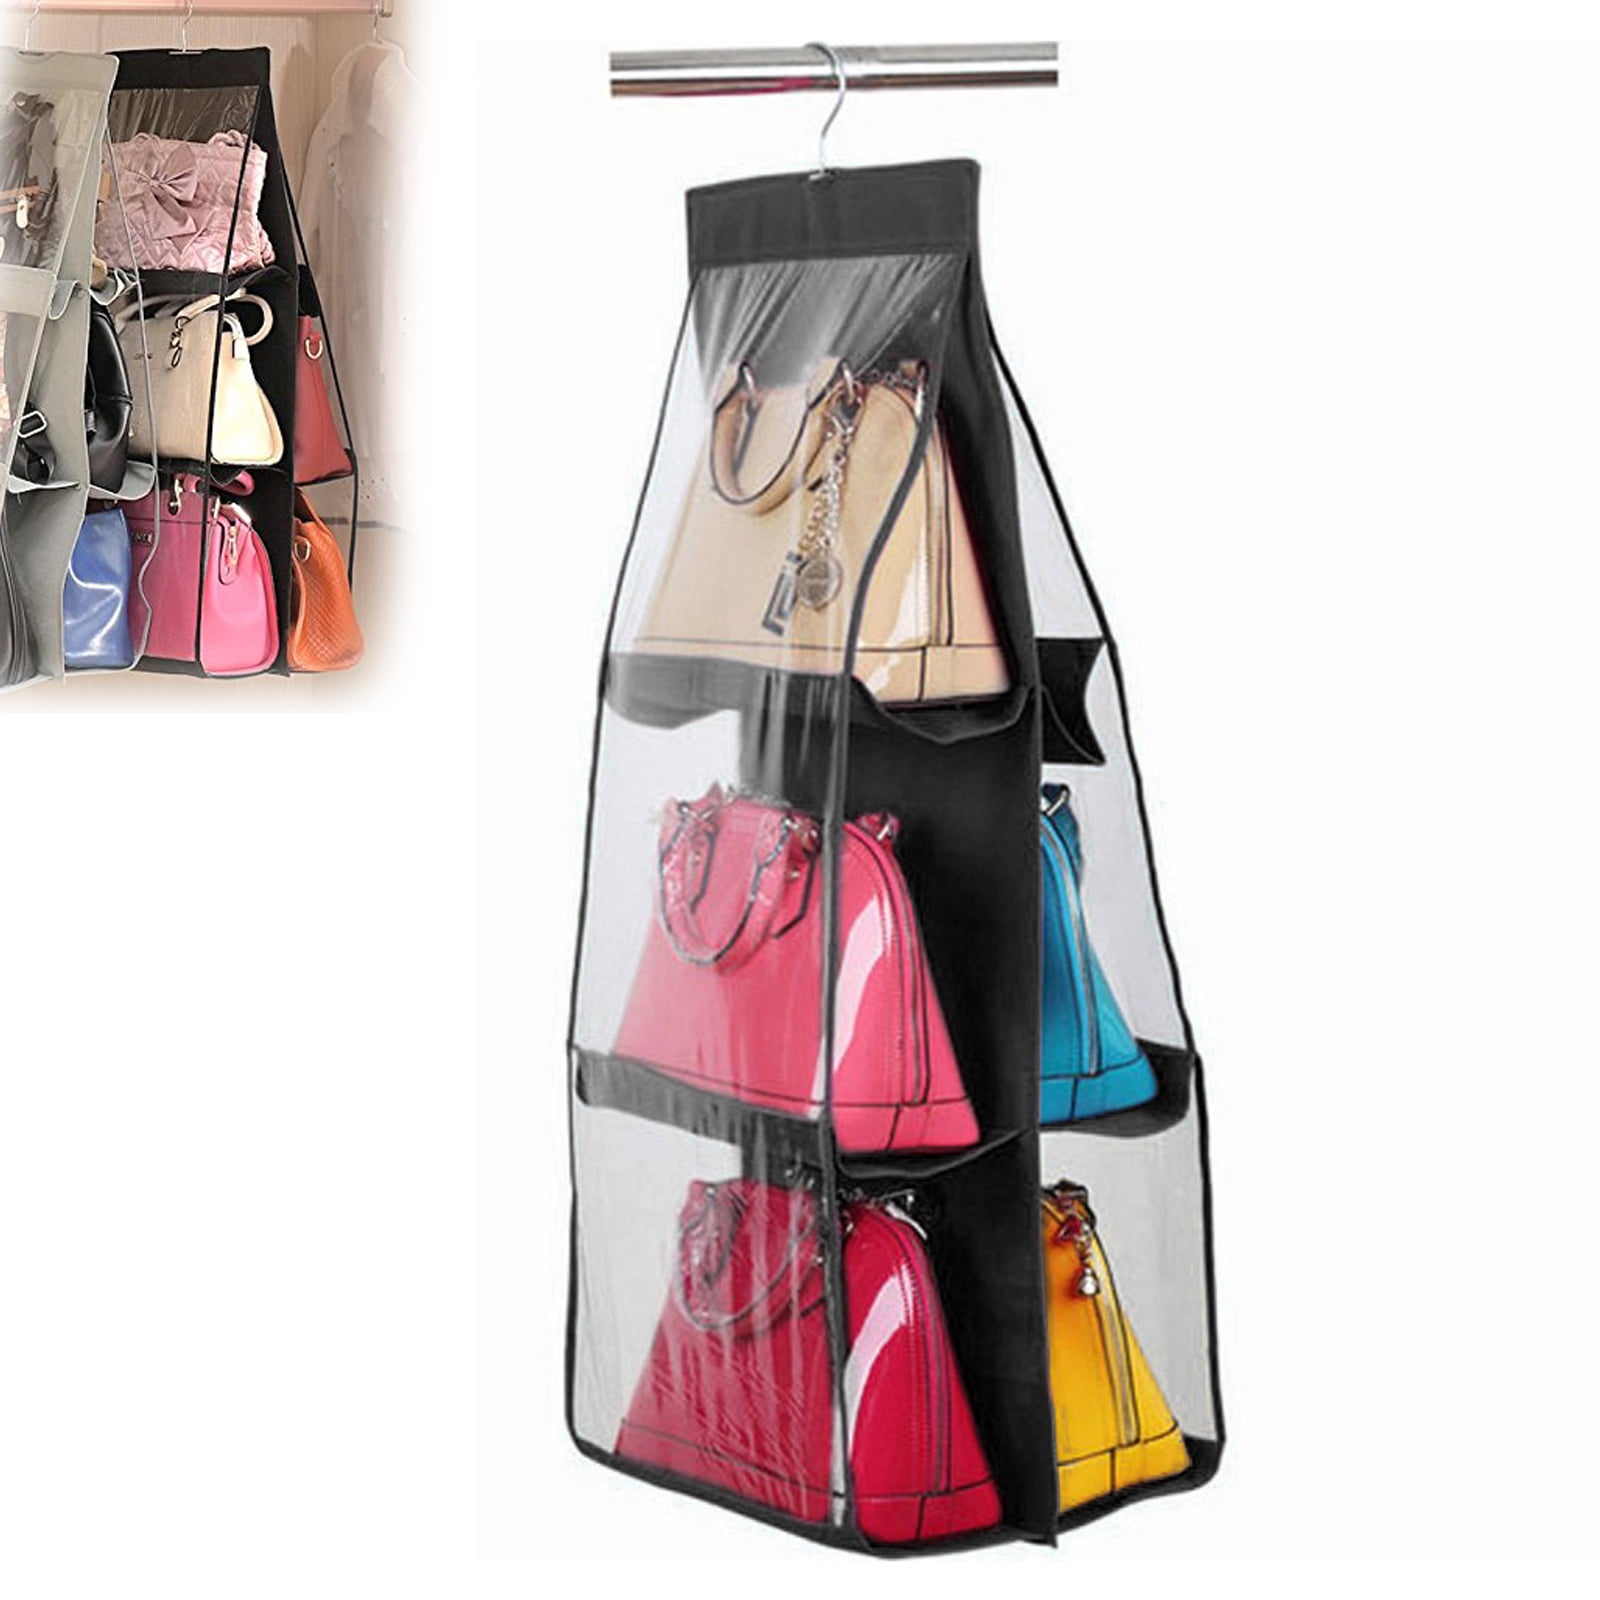 Hanging Handbag Organizer Dust Proof Storage Holder Bag Wardrobe Closet for Purse Clutch with 6 Larger Pockets for Organizing and Storing Women Handbags（Black）